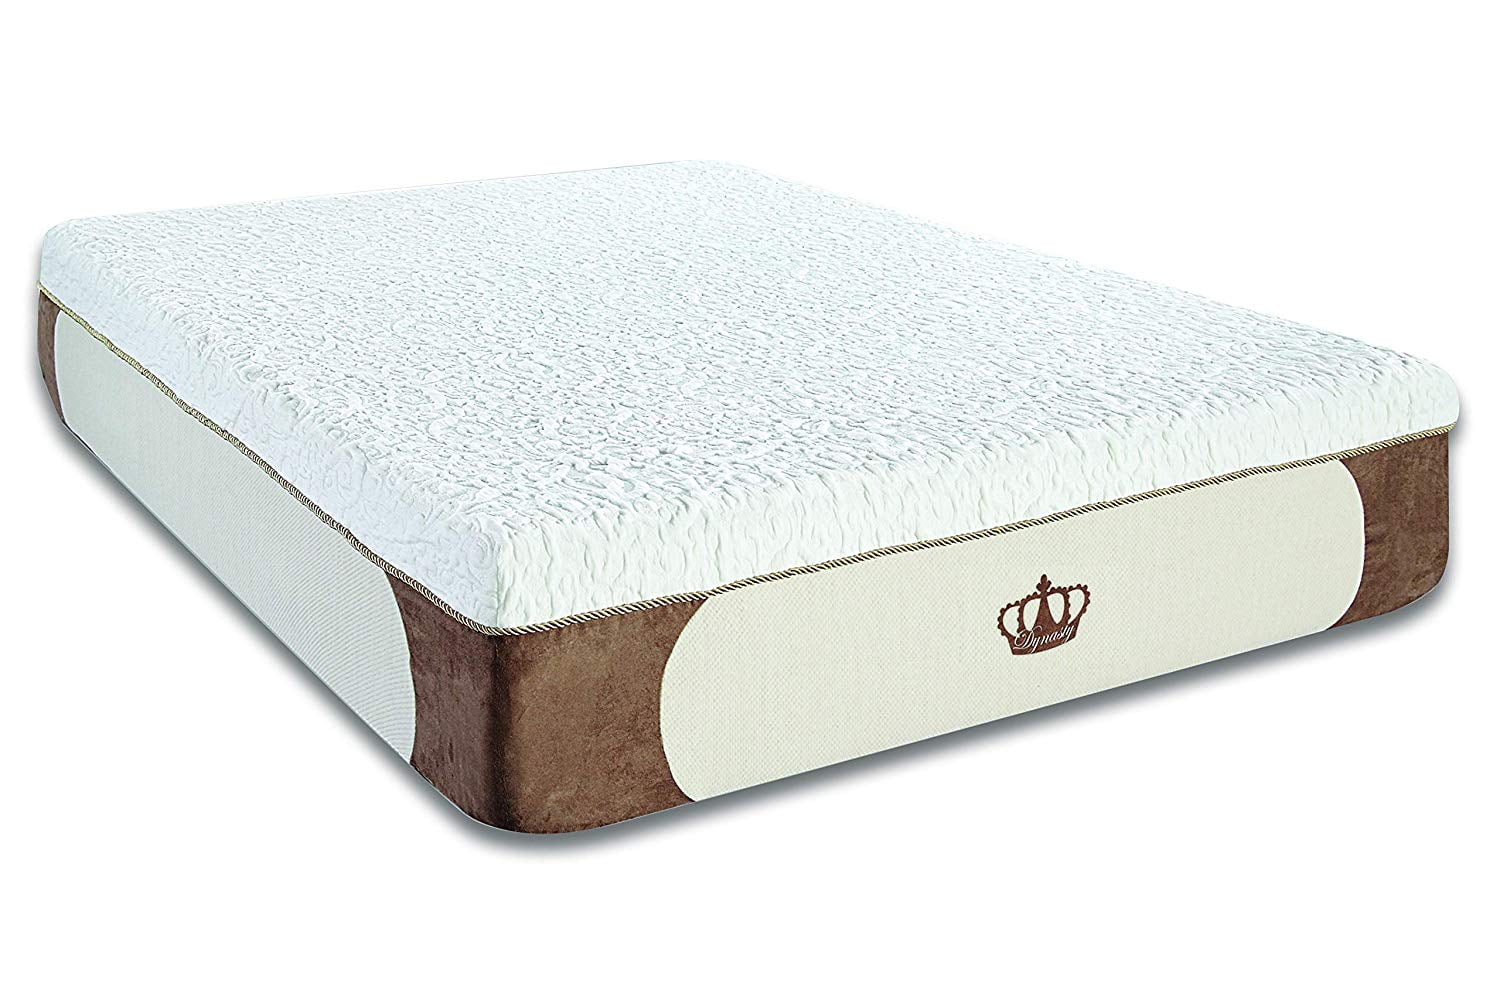 cb classic 14 inch foam mattress cal king